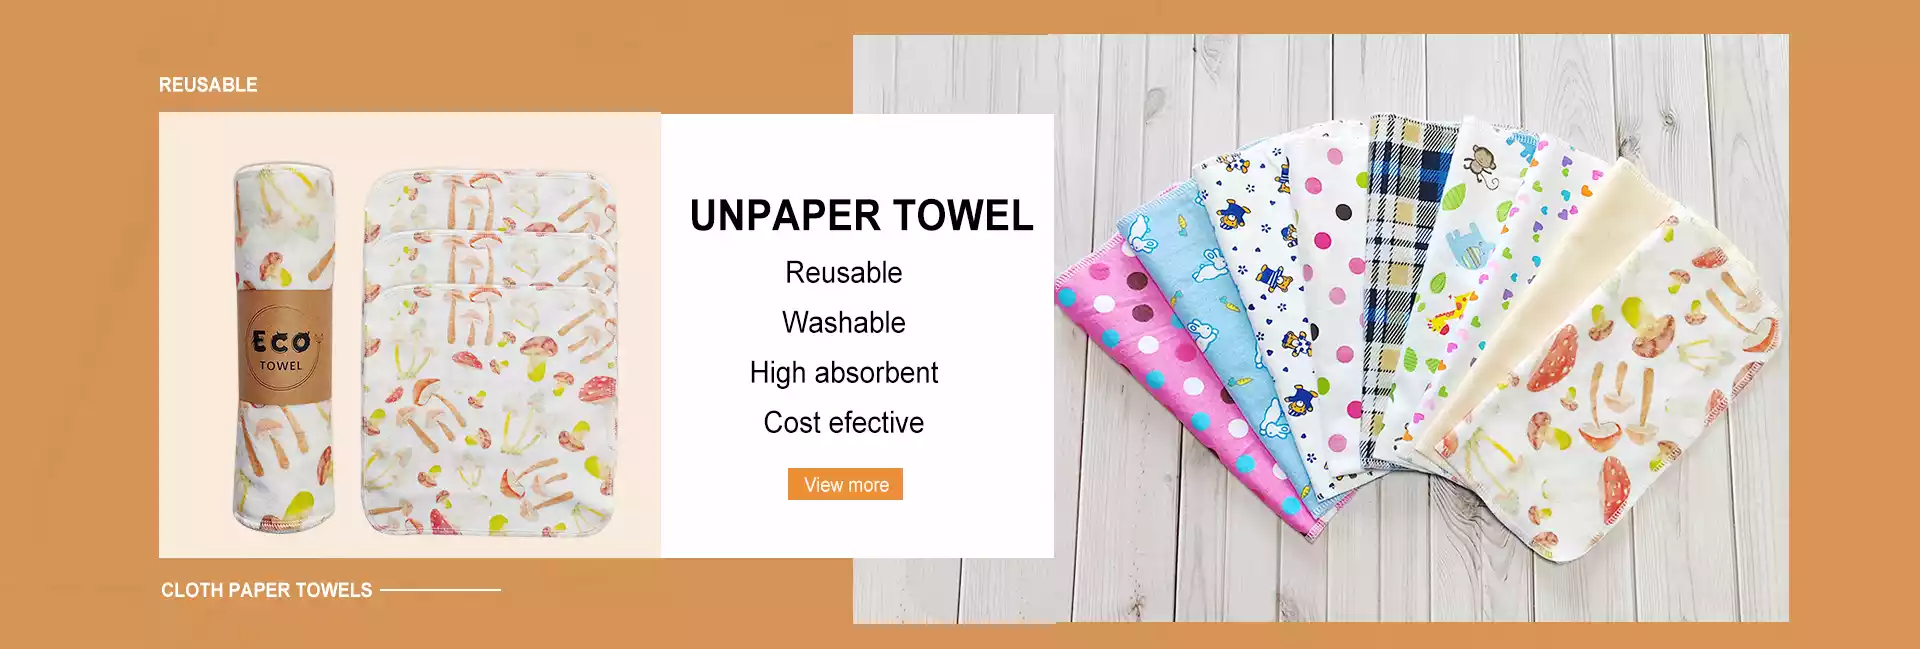 Reusable Unpaper Towel